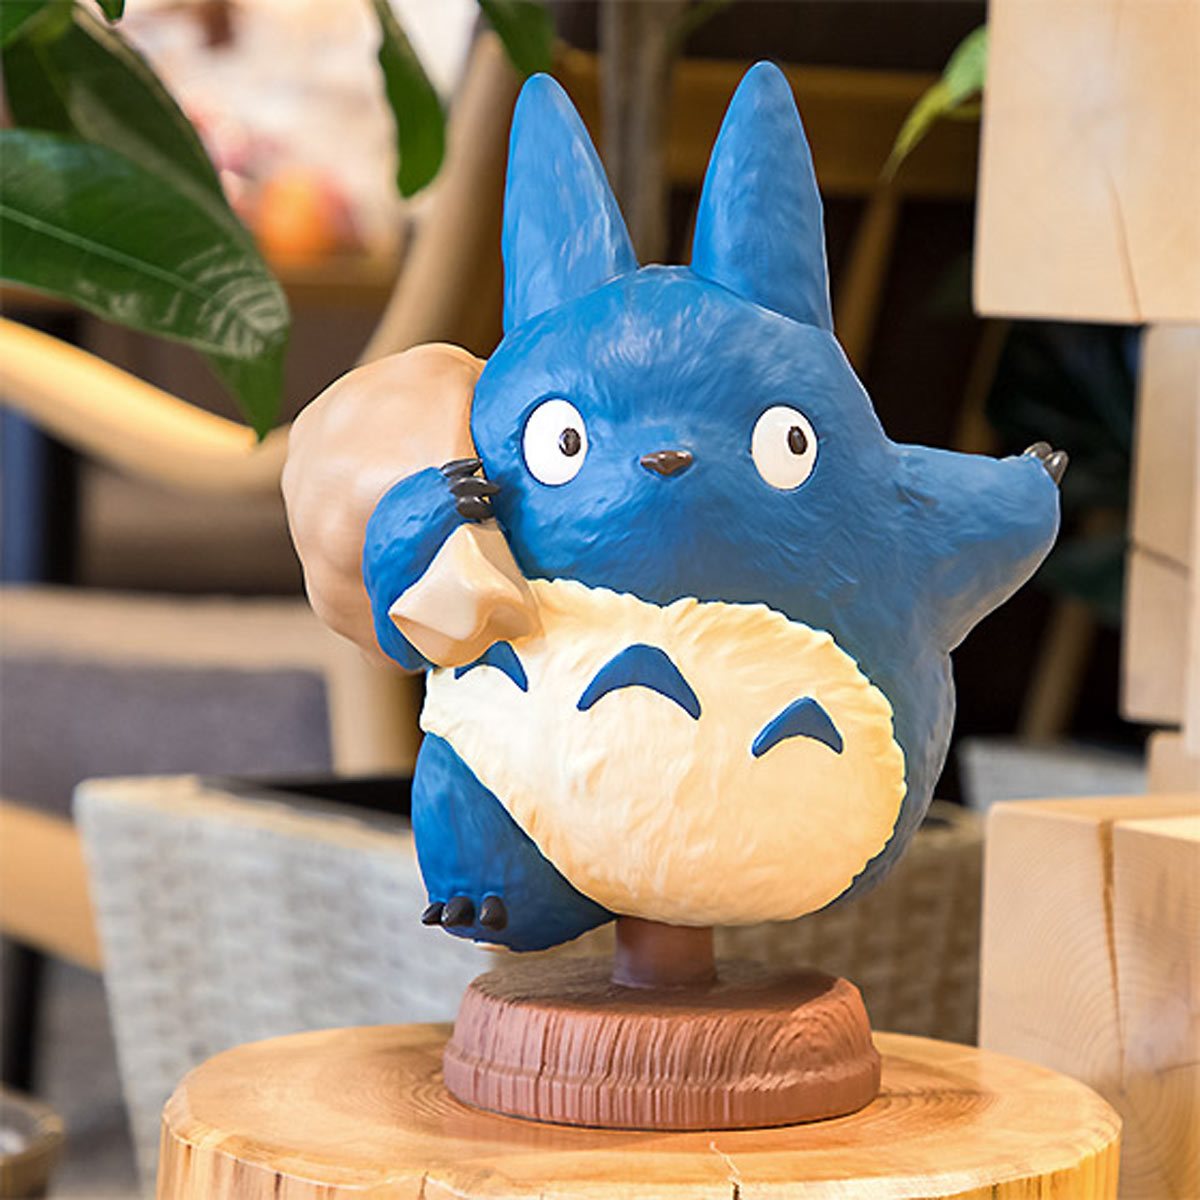 My Neighbor Totoro Found You! - Medium Blue Totoro Resin Figure Benelic Limited